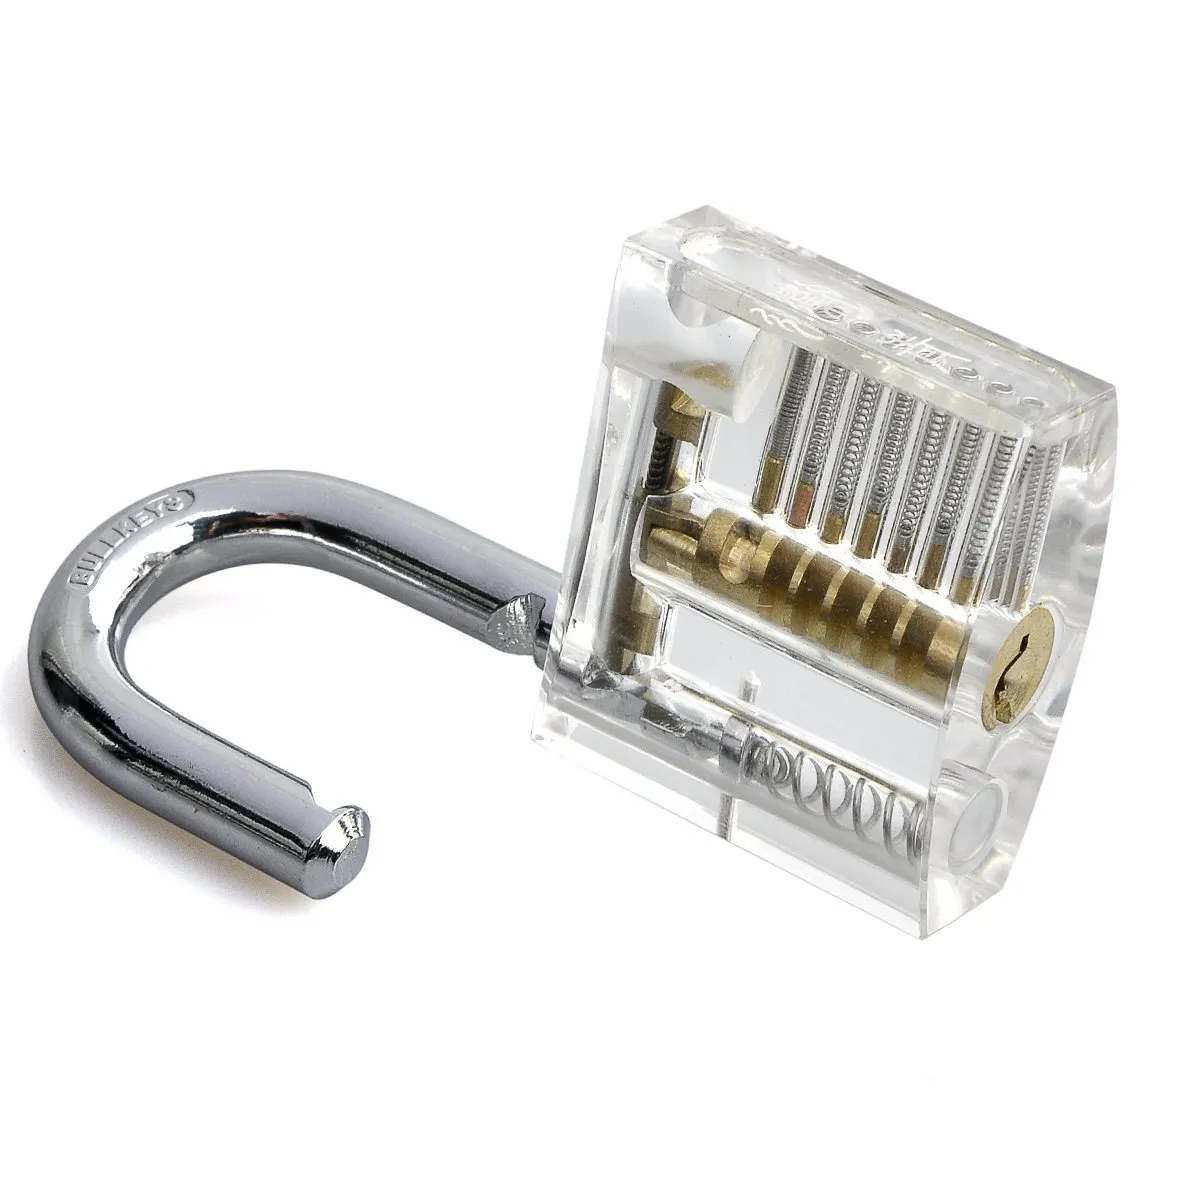 15 stuk Lock Picks Set Professionele Transparante Cutaway Hangslot Practice Lock met Locksmith Tools voor Lock Pick Training Trainer Practice